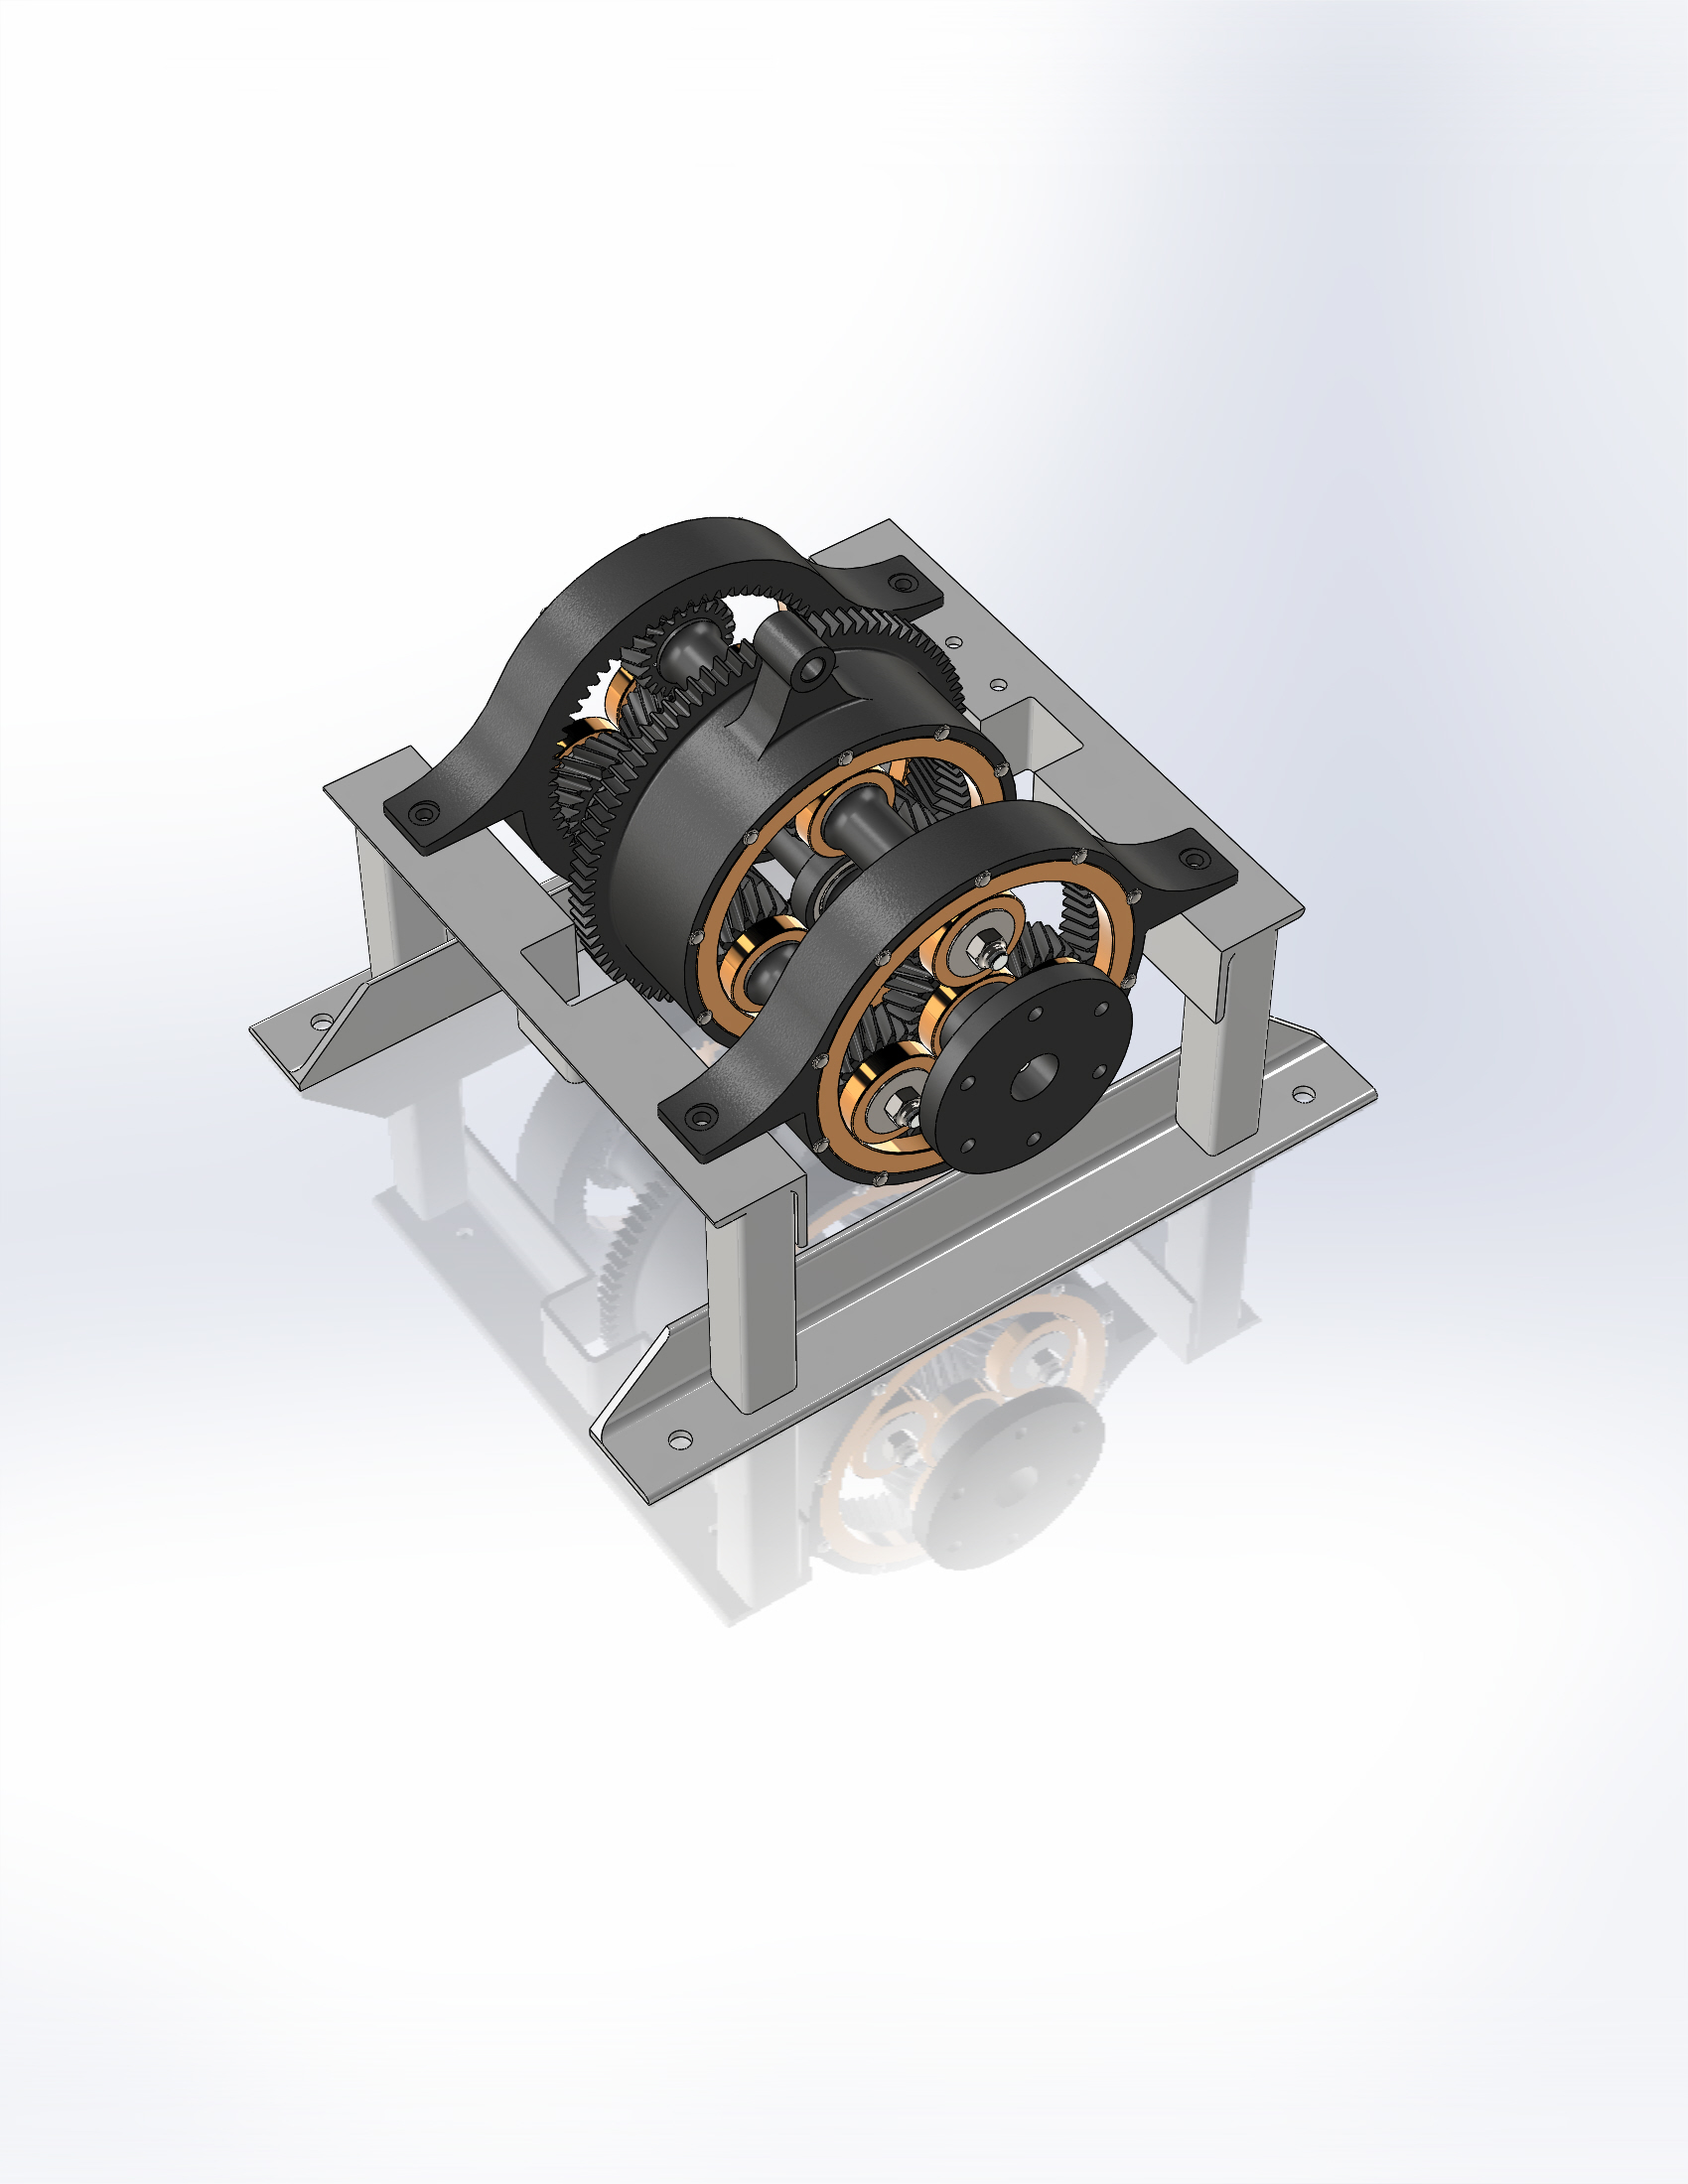 Ring Gear 3D Model  Download Scientific Diagram